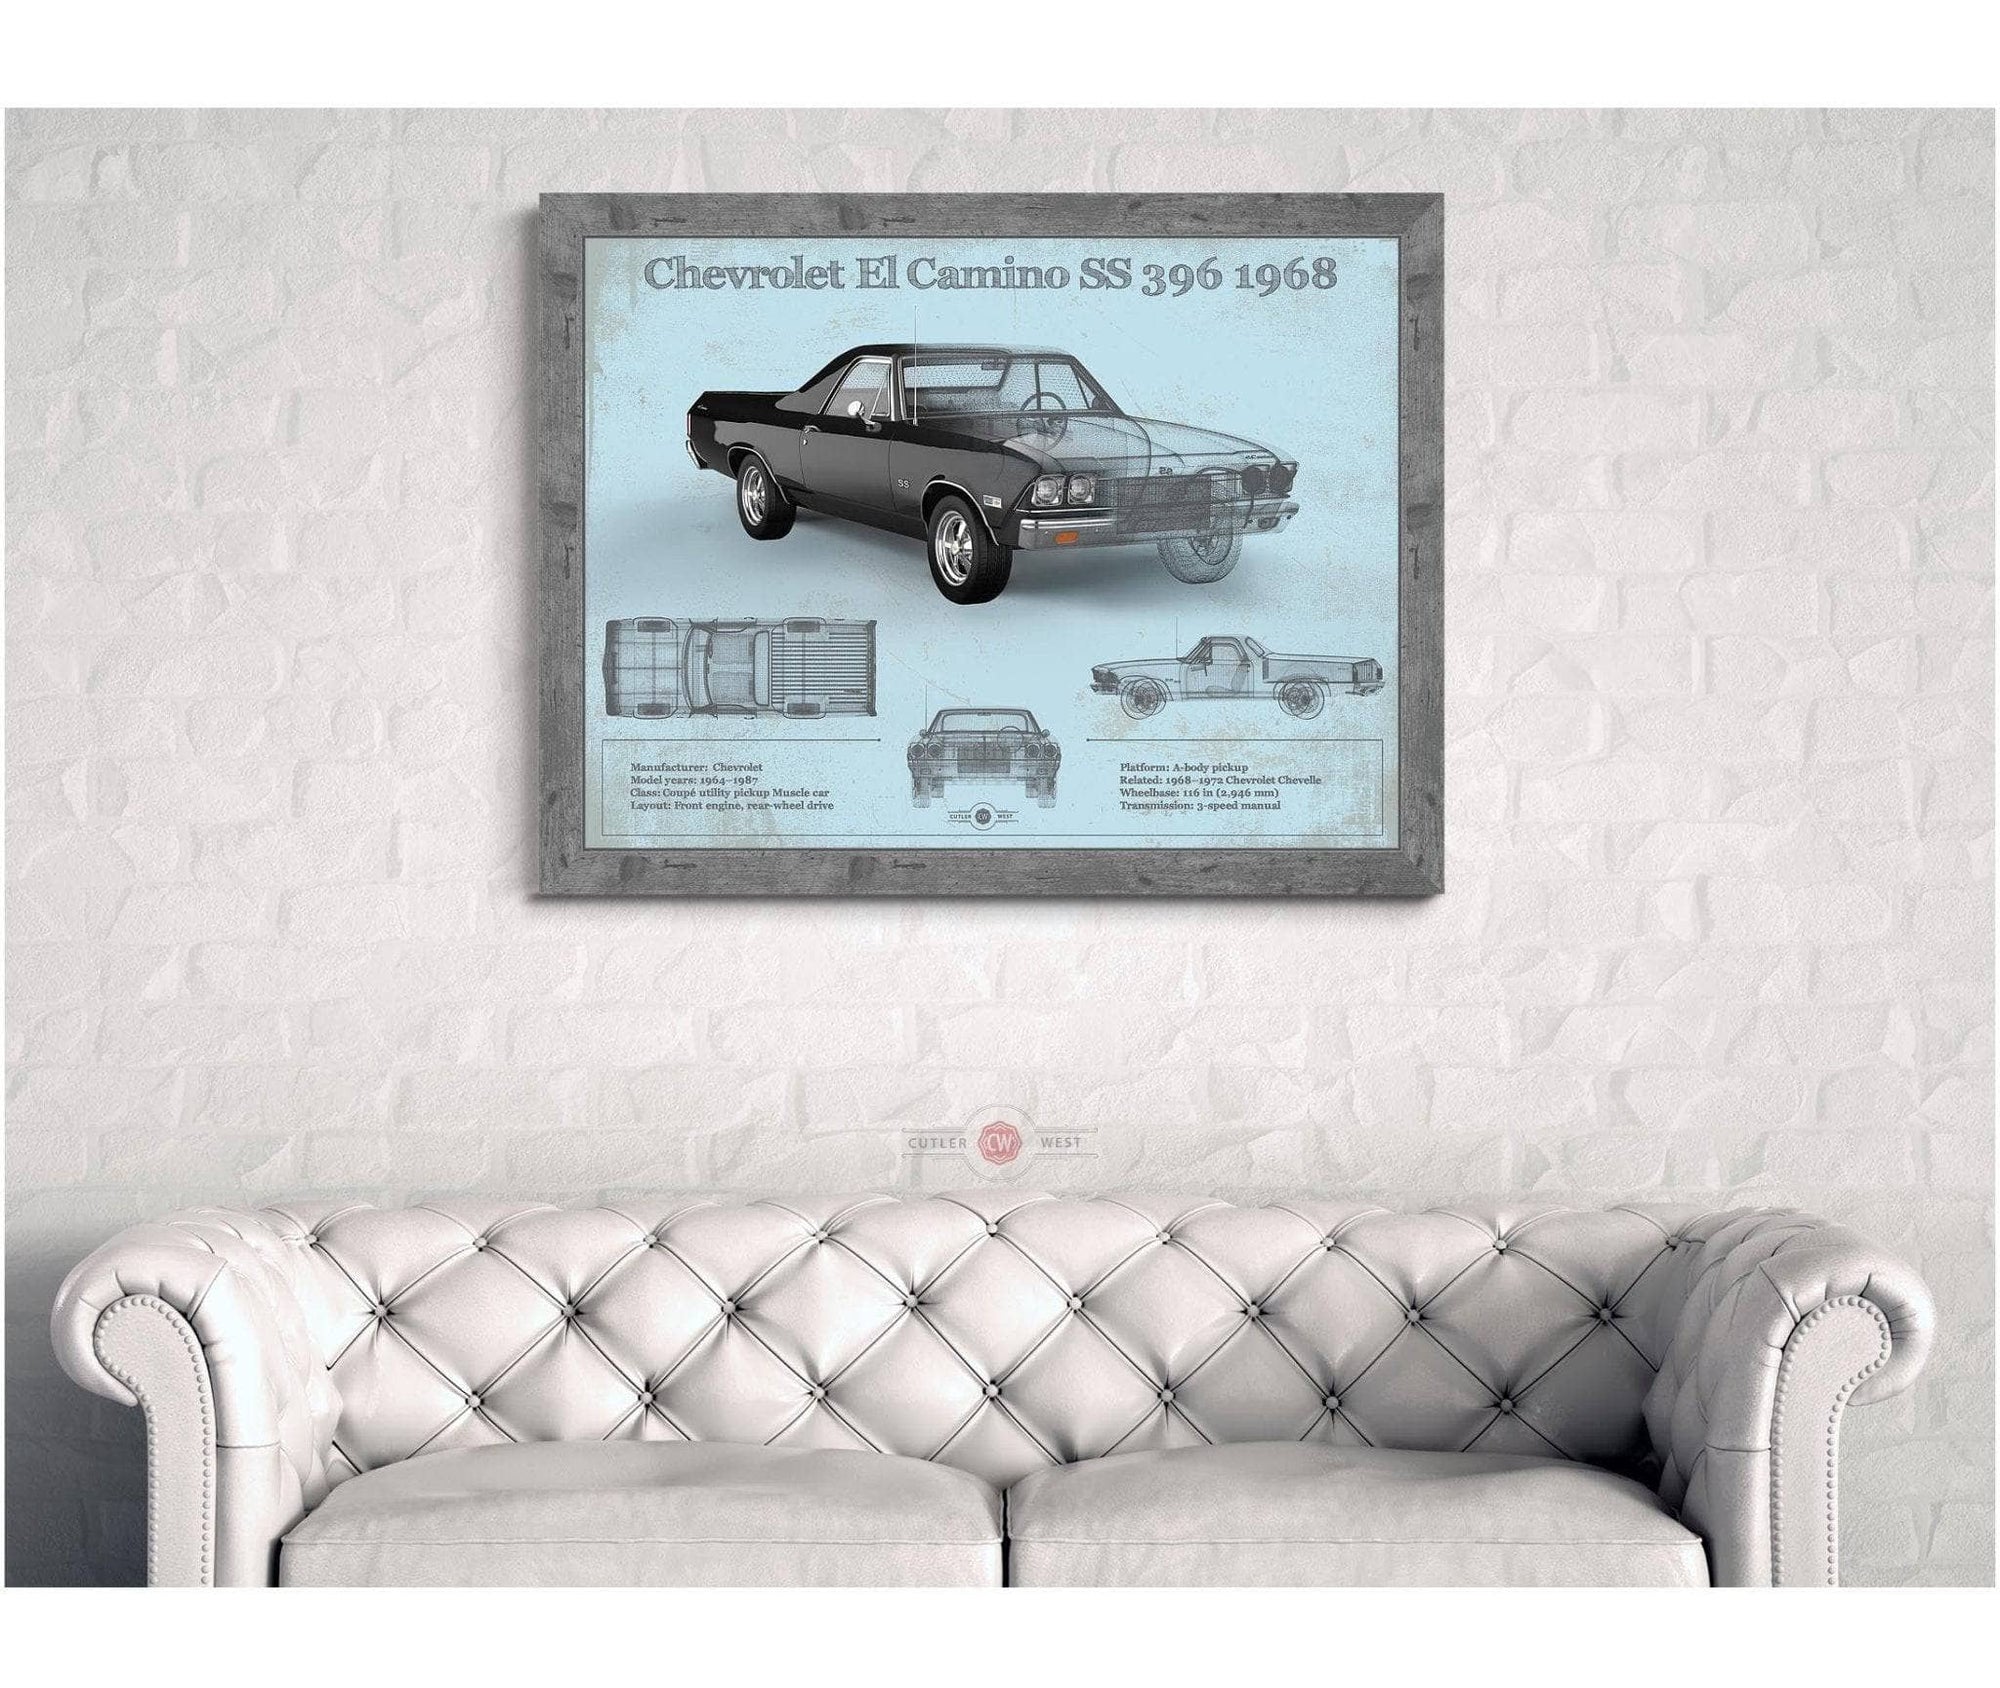 Cutler West Chevrolet Collection Chevrolet El Camino SS 396 1968 Vintage Blueprint Auto Print